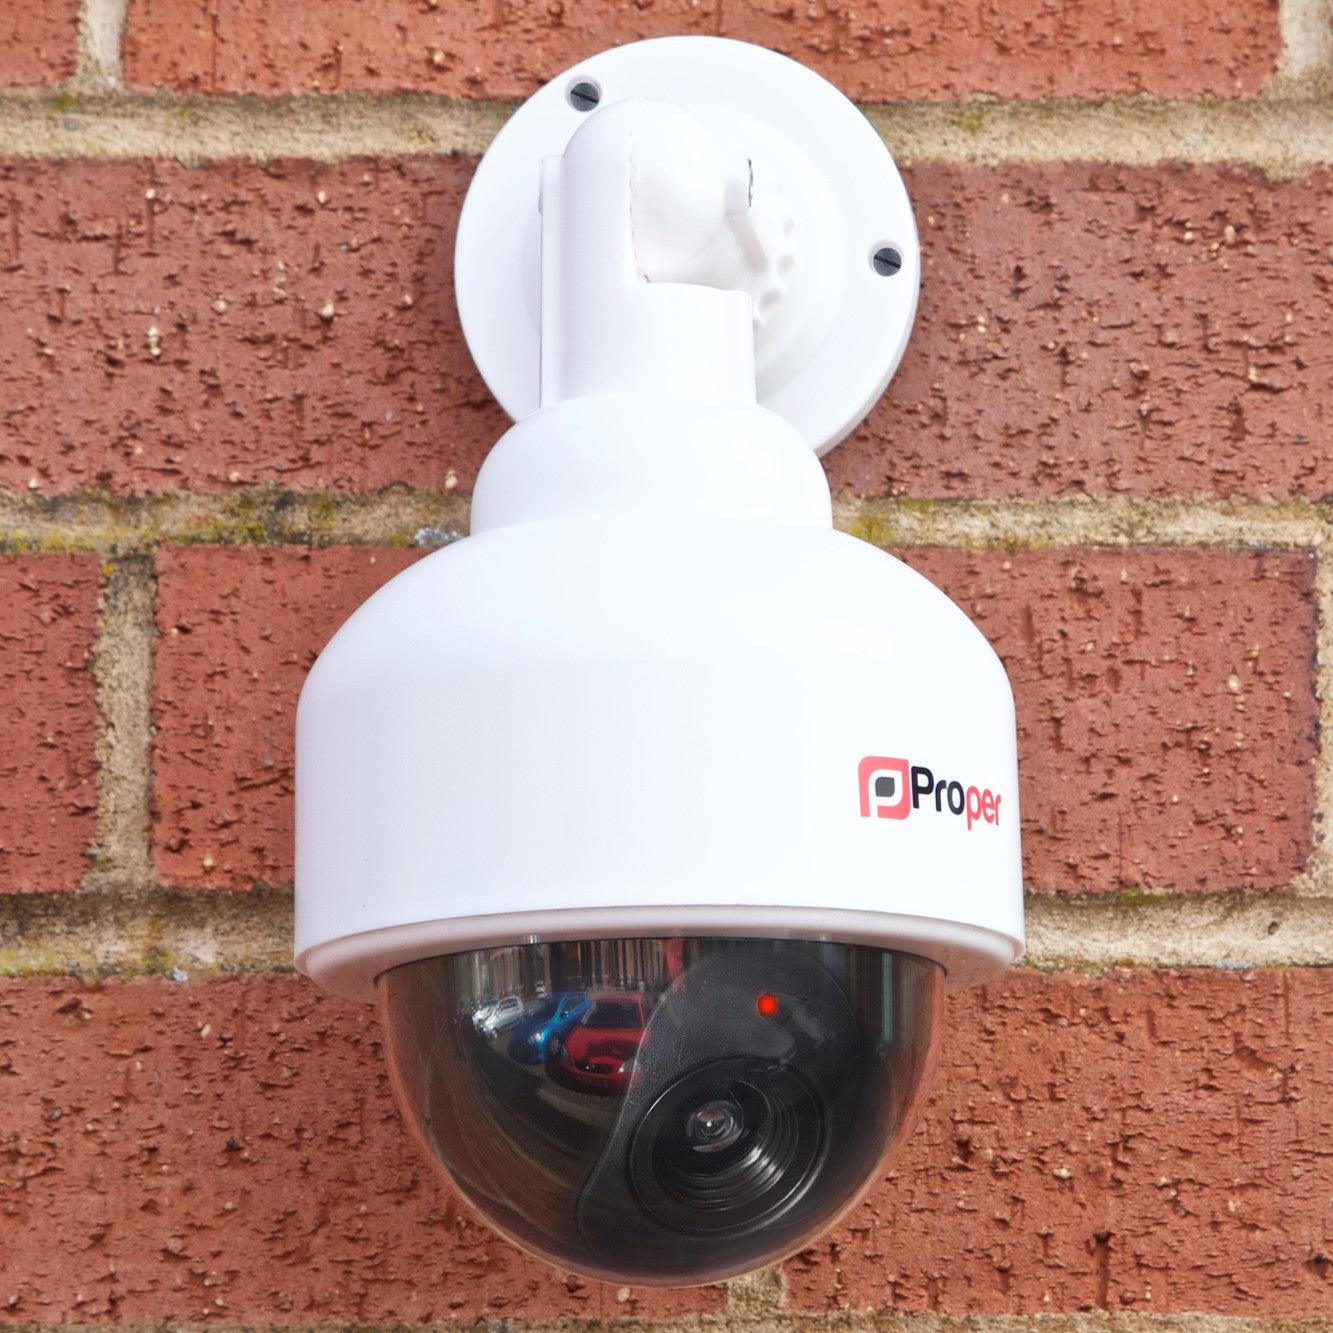 ProperAV Imitation Security Speed Dome Camera with Flashing Light - White - maplin.co.uk